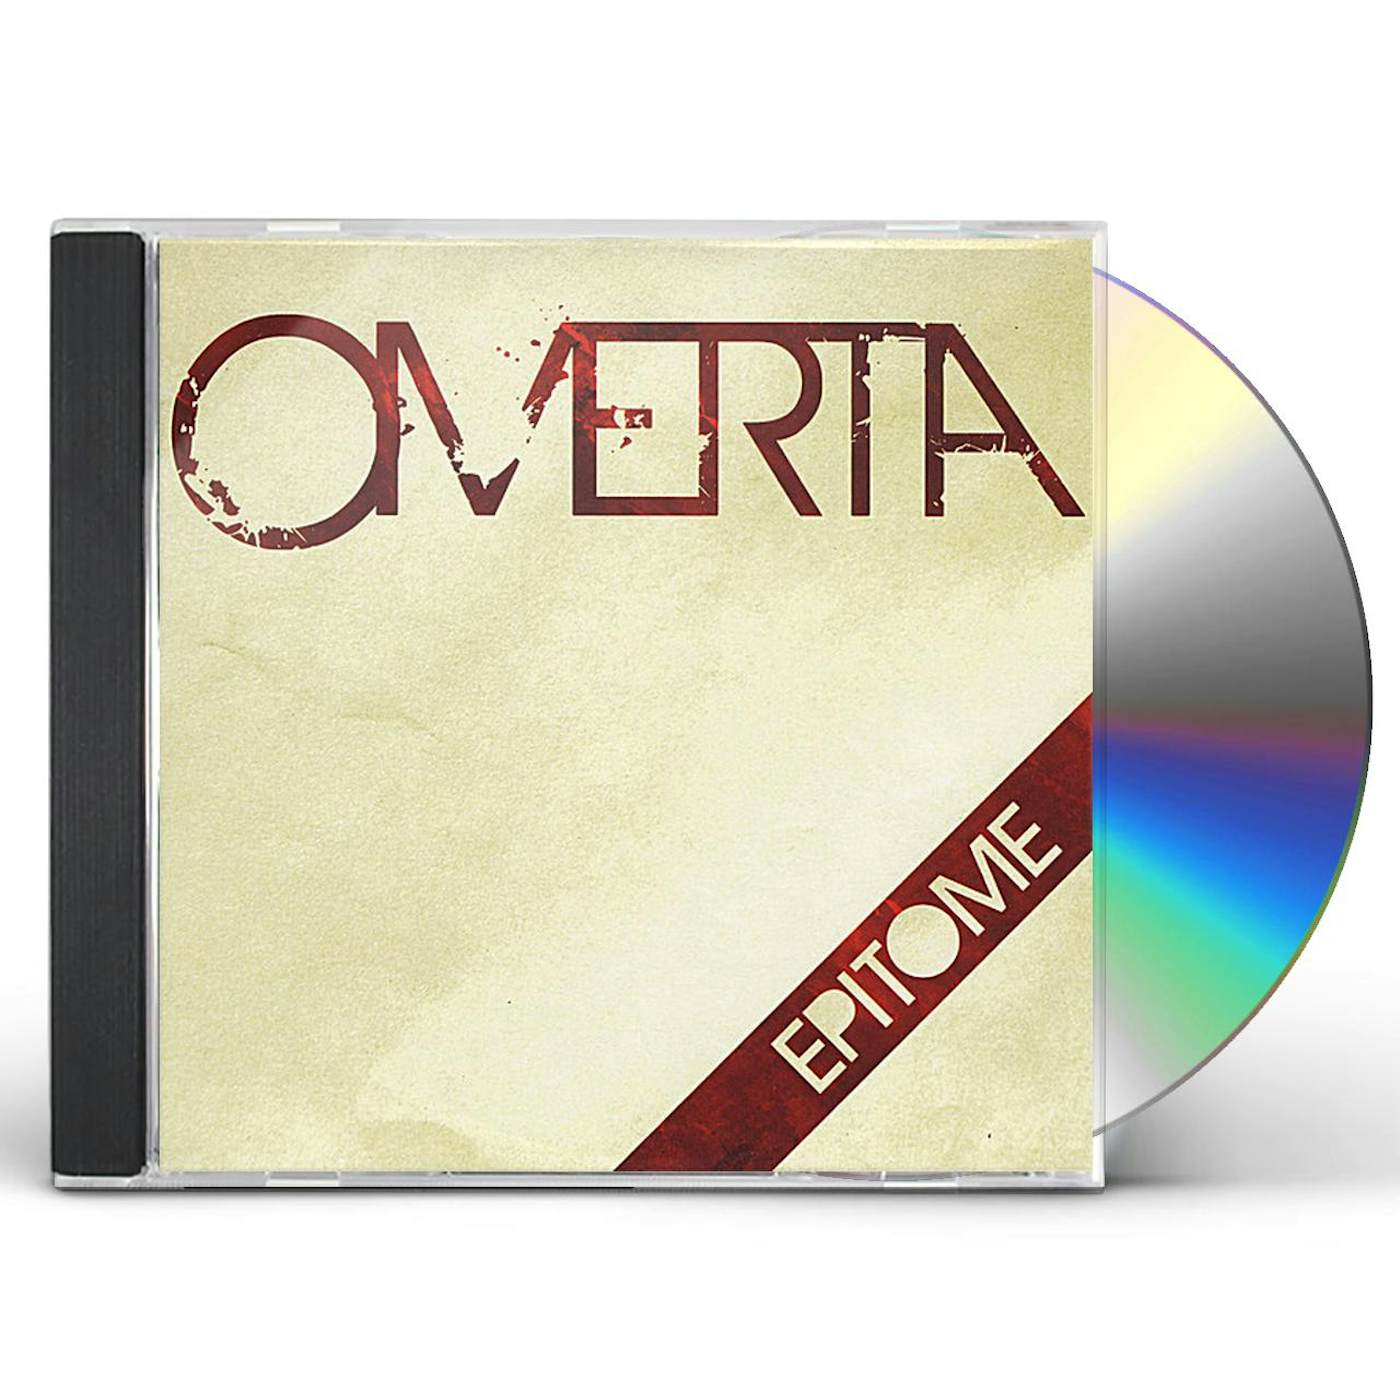 Omerta EPITOME CD